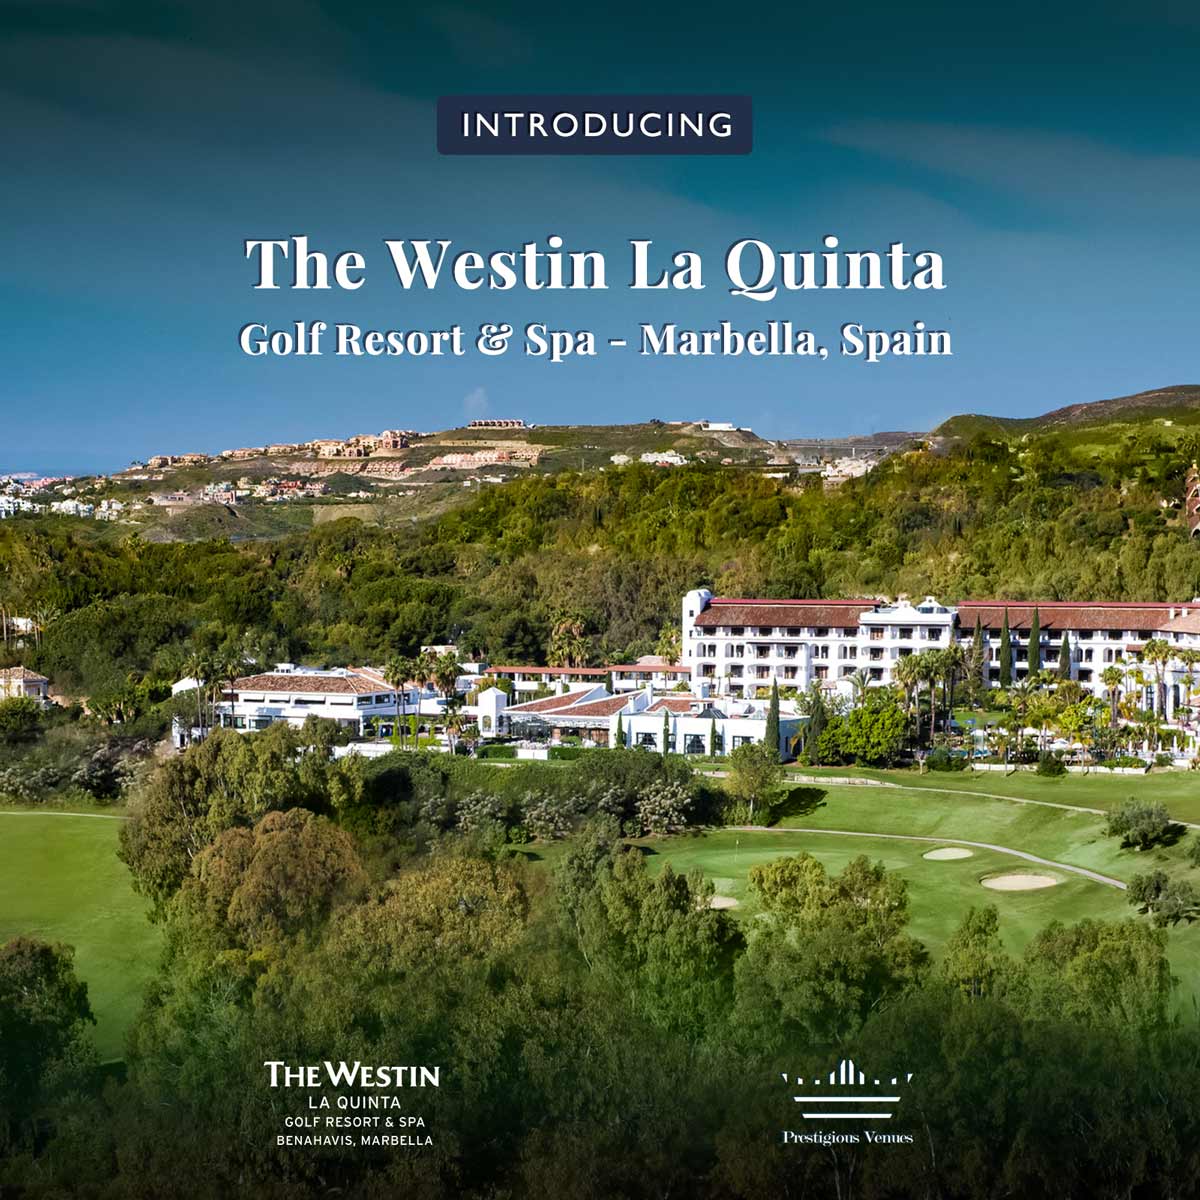 The Westin La Quinta, Spain